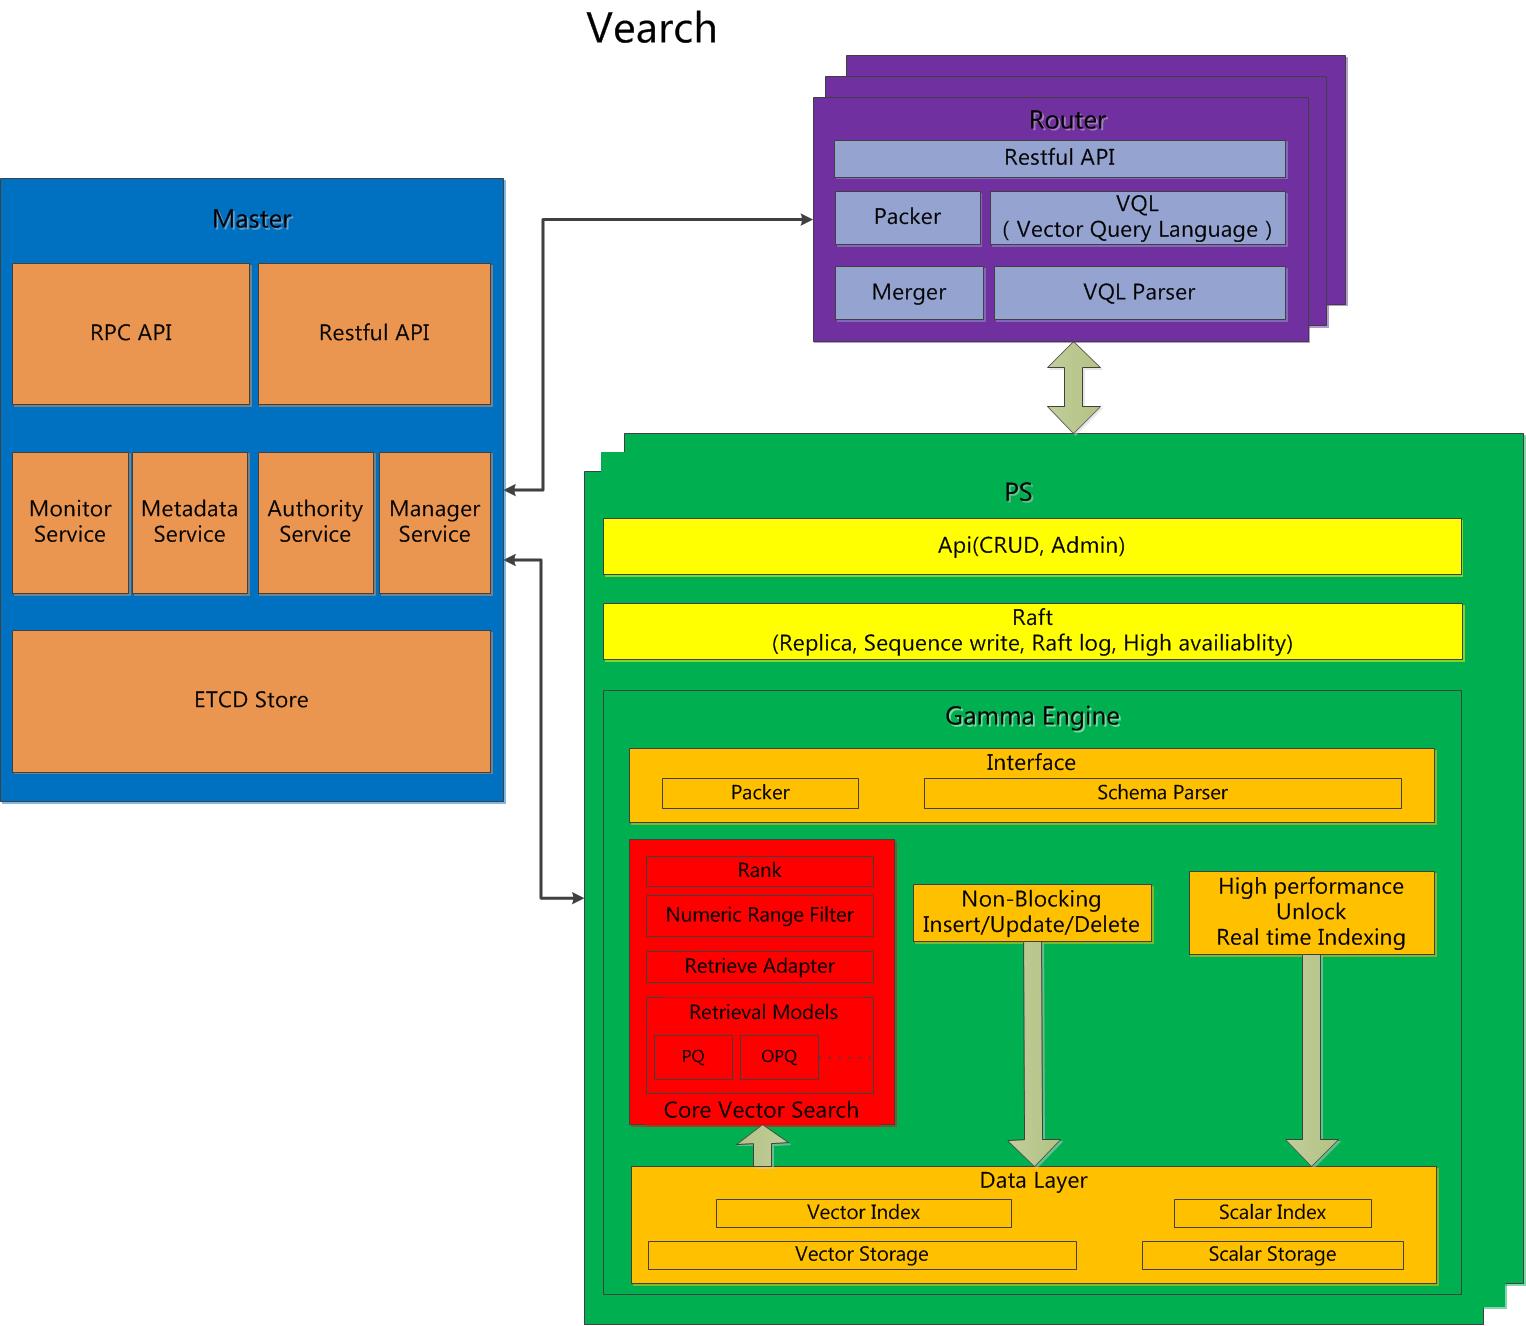 Vearch architecture diagram